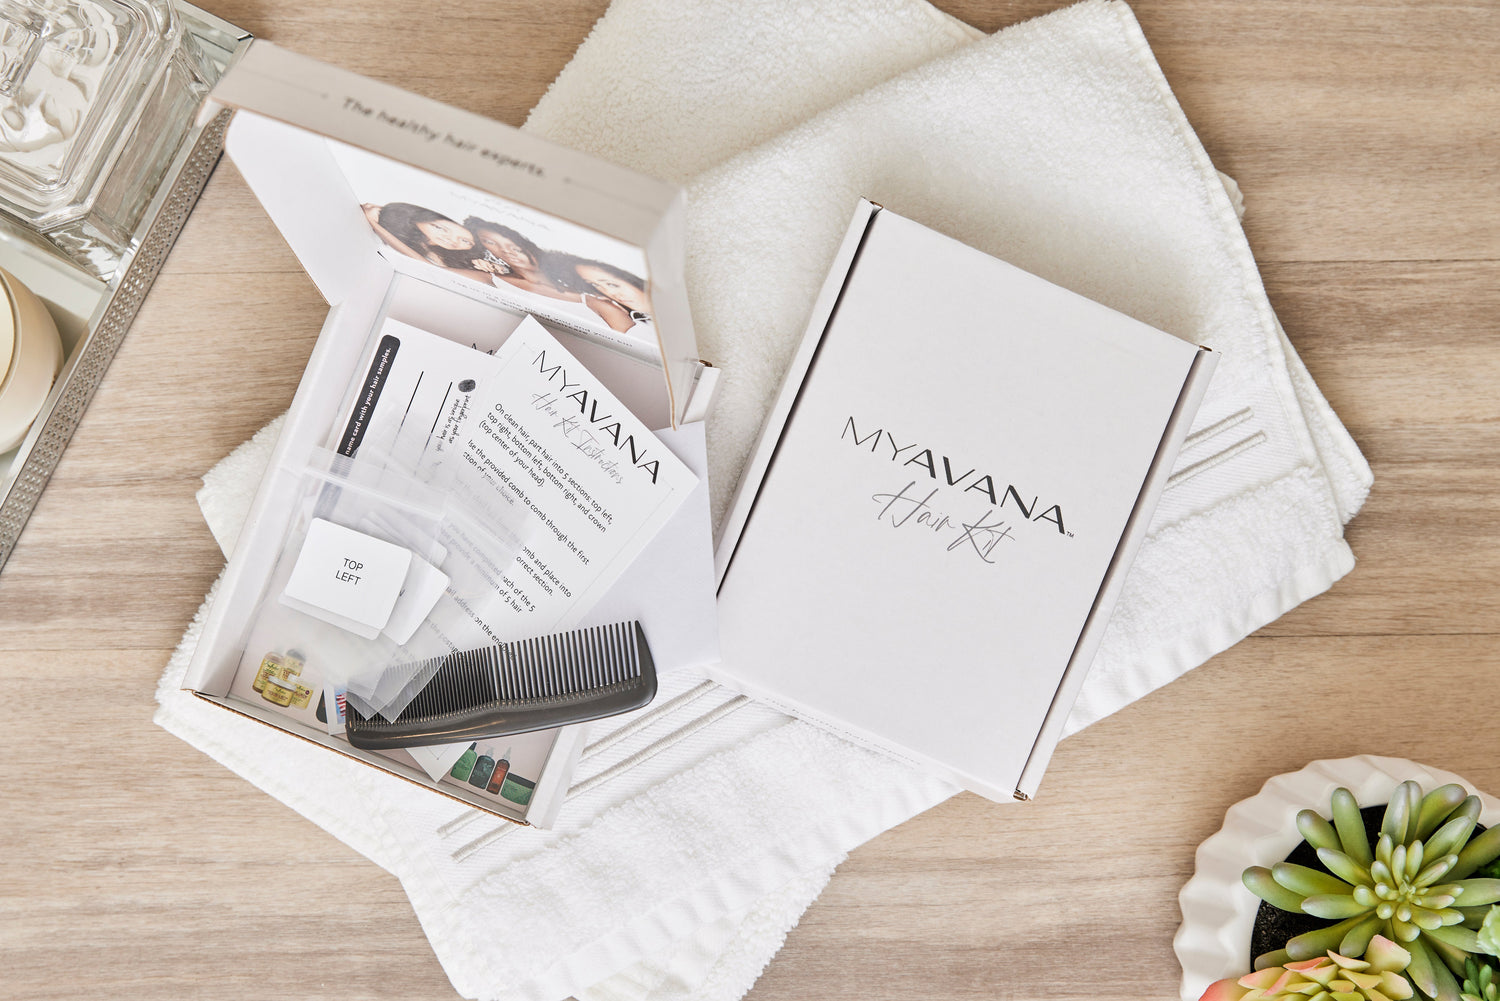 MYAVANA Hair Analysis Kit + 3 Month Membership Bundle - Special Gift